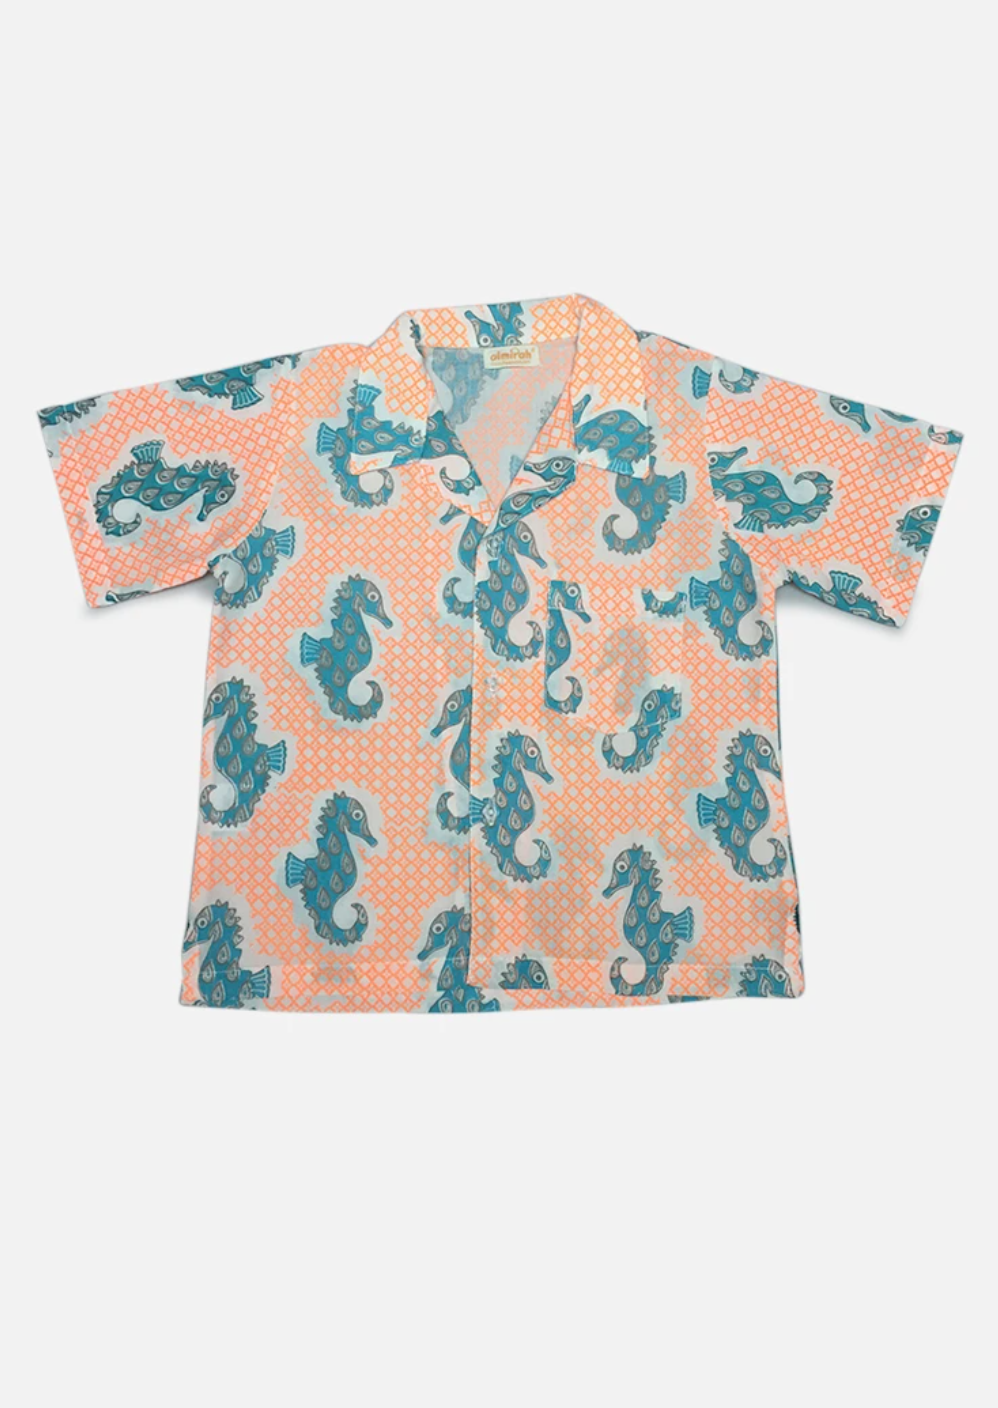 Boys Cotton Shirt in Neon Seahorse Print